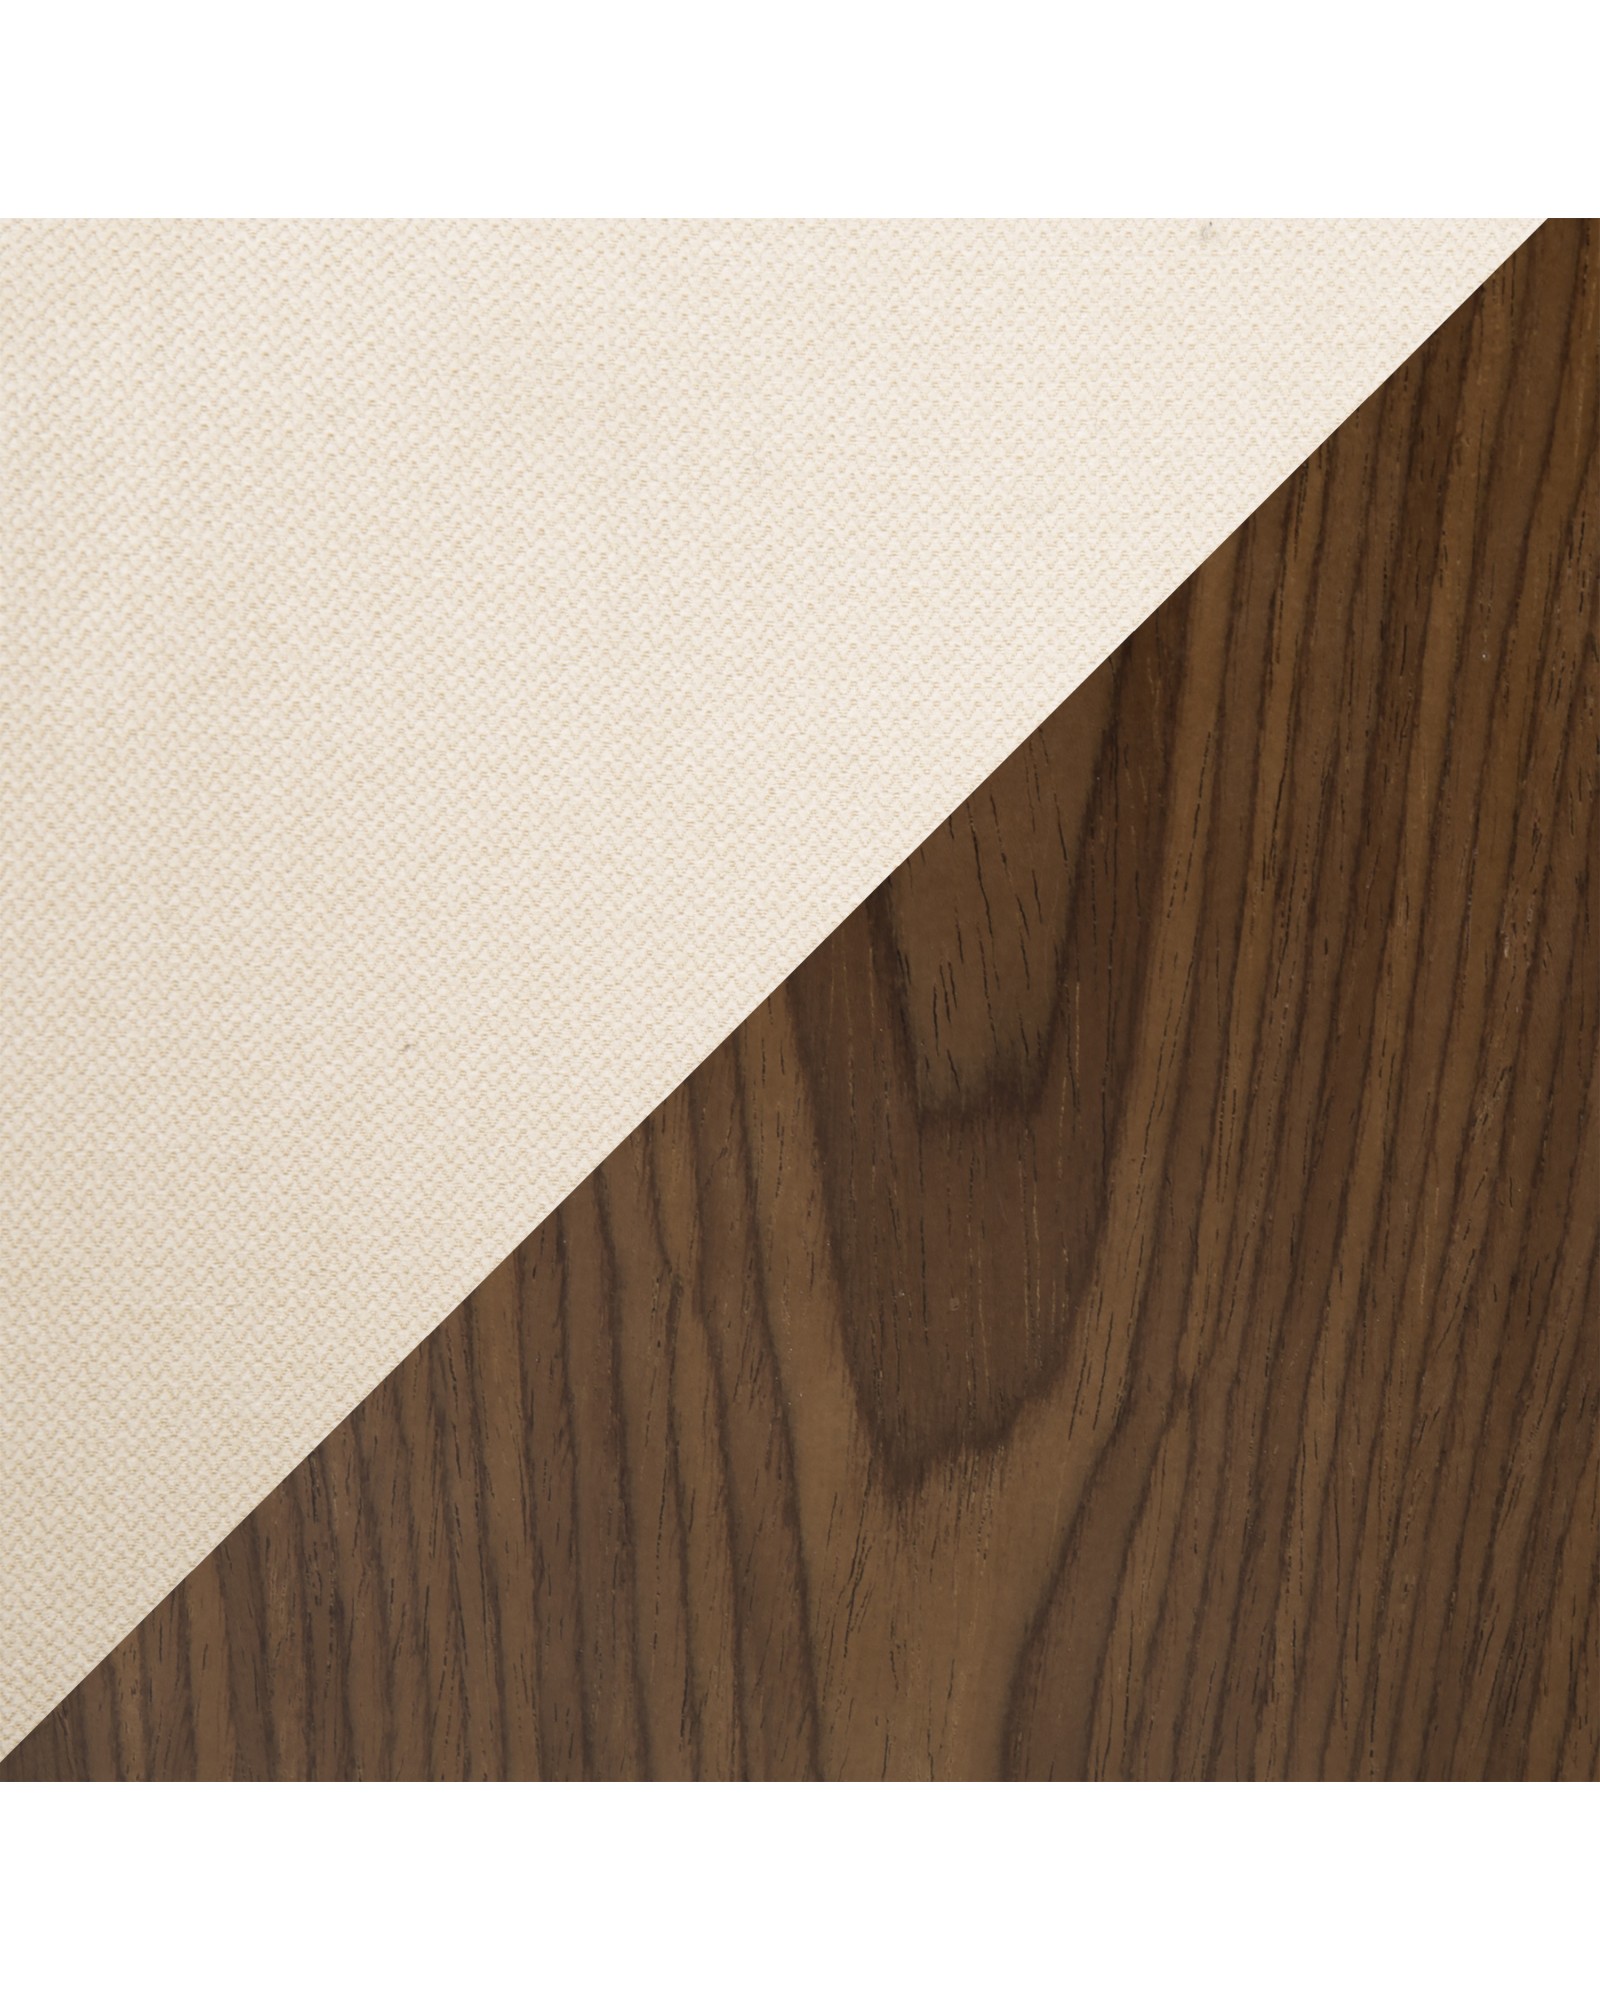 Curvini Mid-Century Modern Barstool in Walnut Wood and Cream Fabric